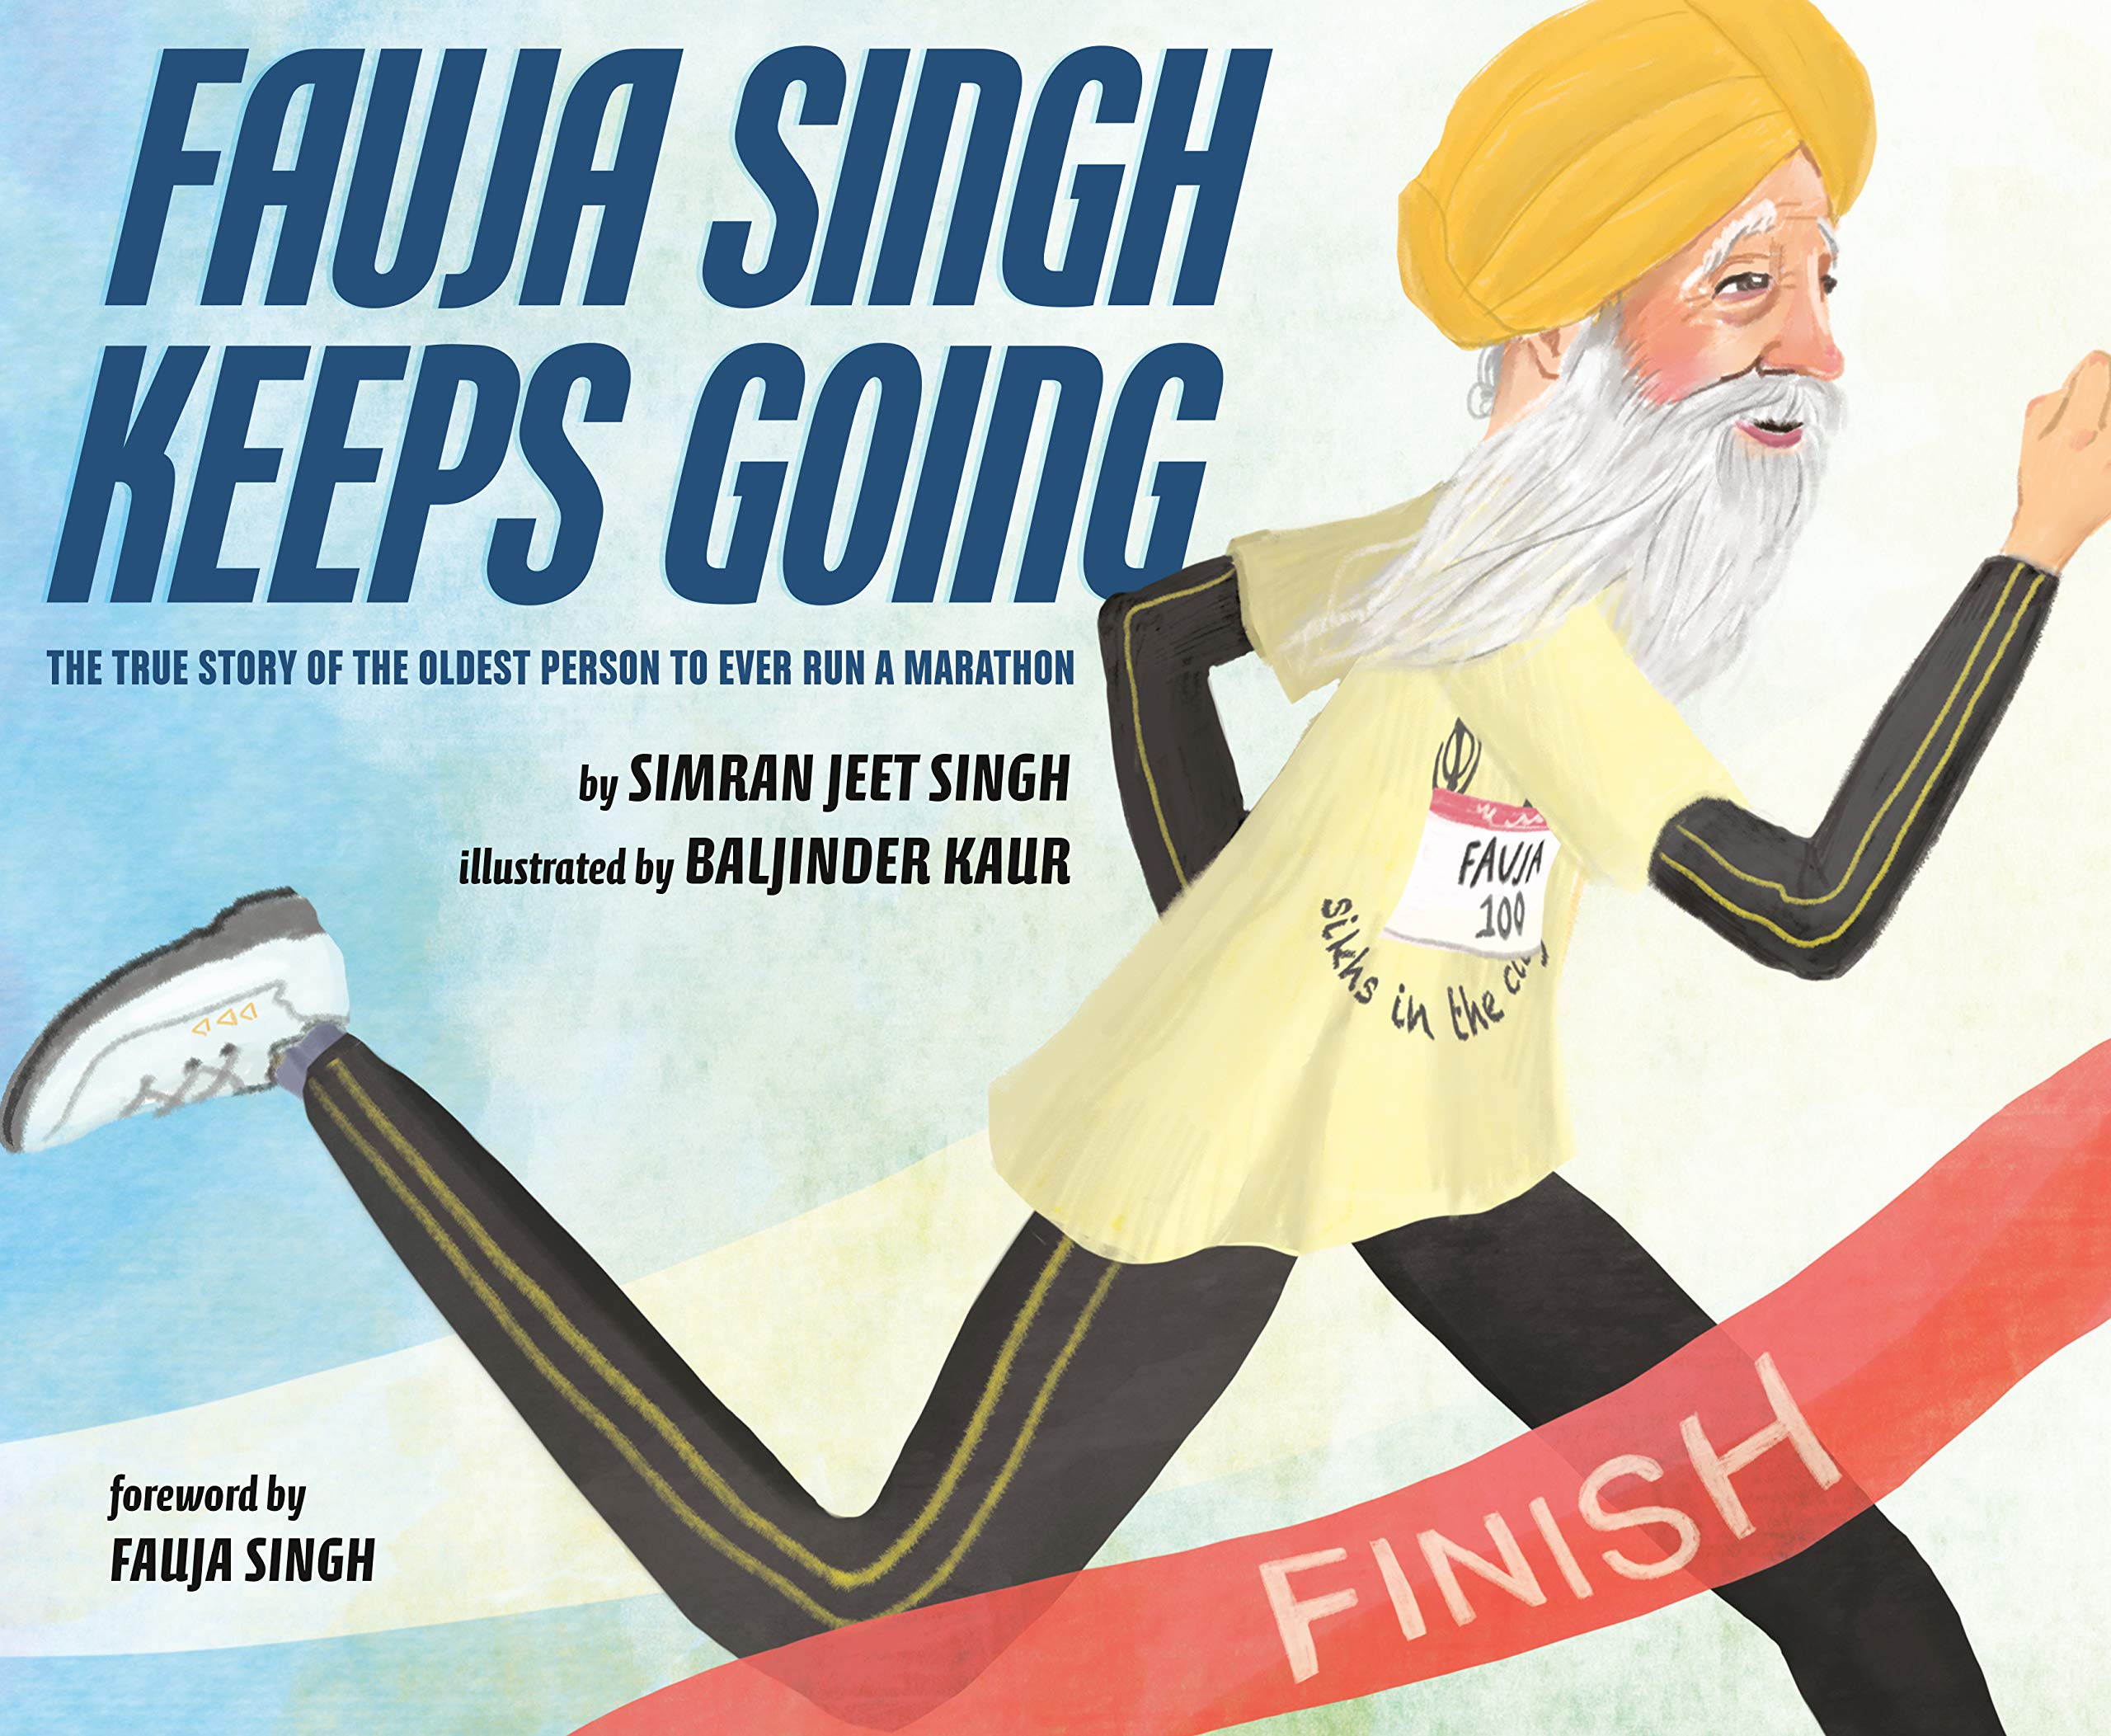 Book cover: Favja Singh Keeps Going